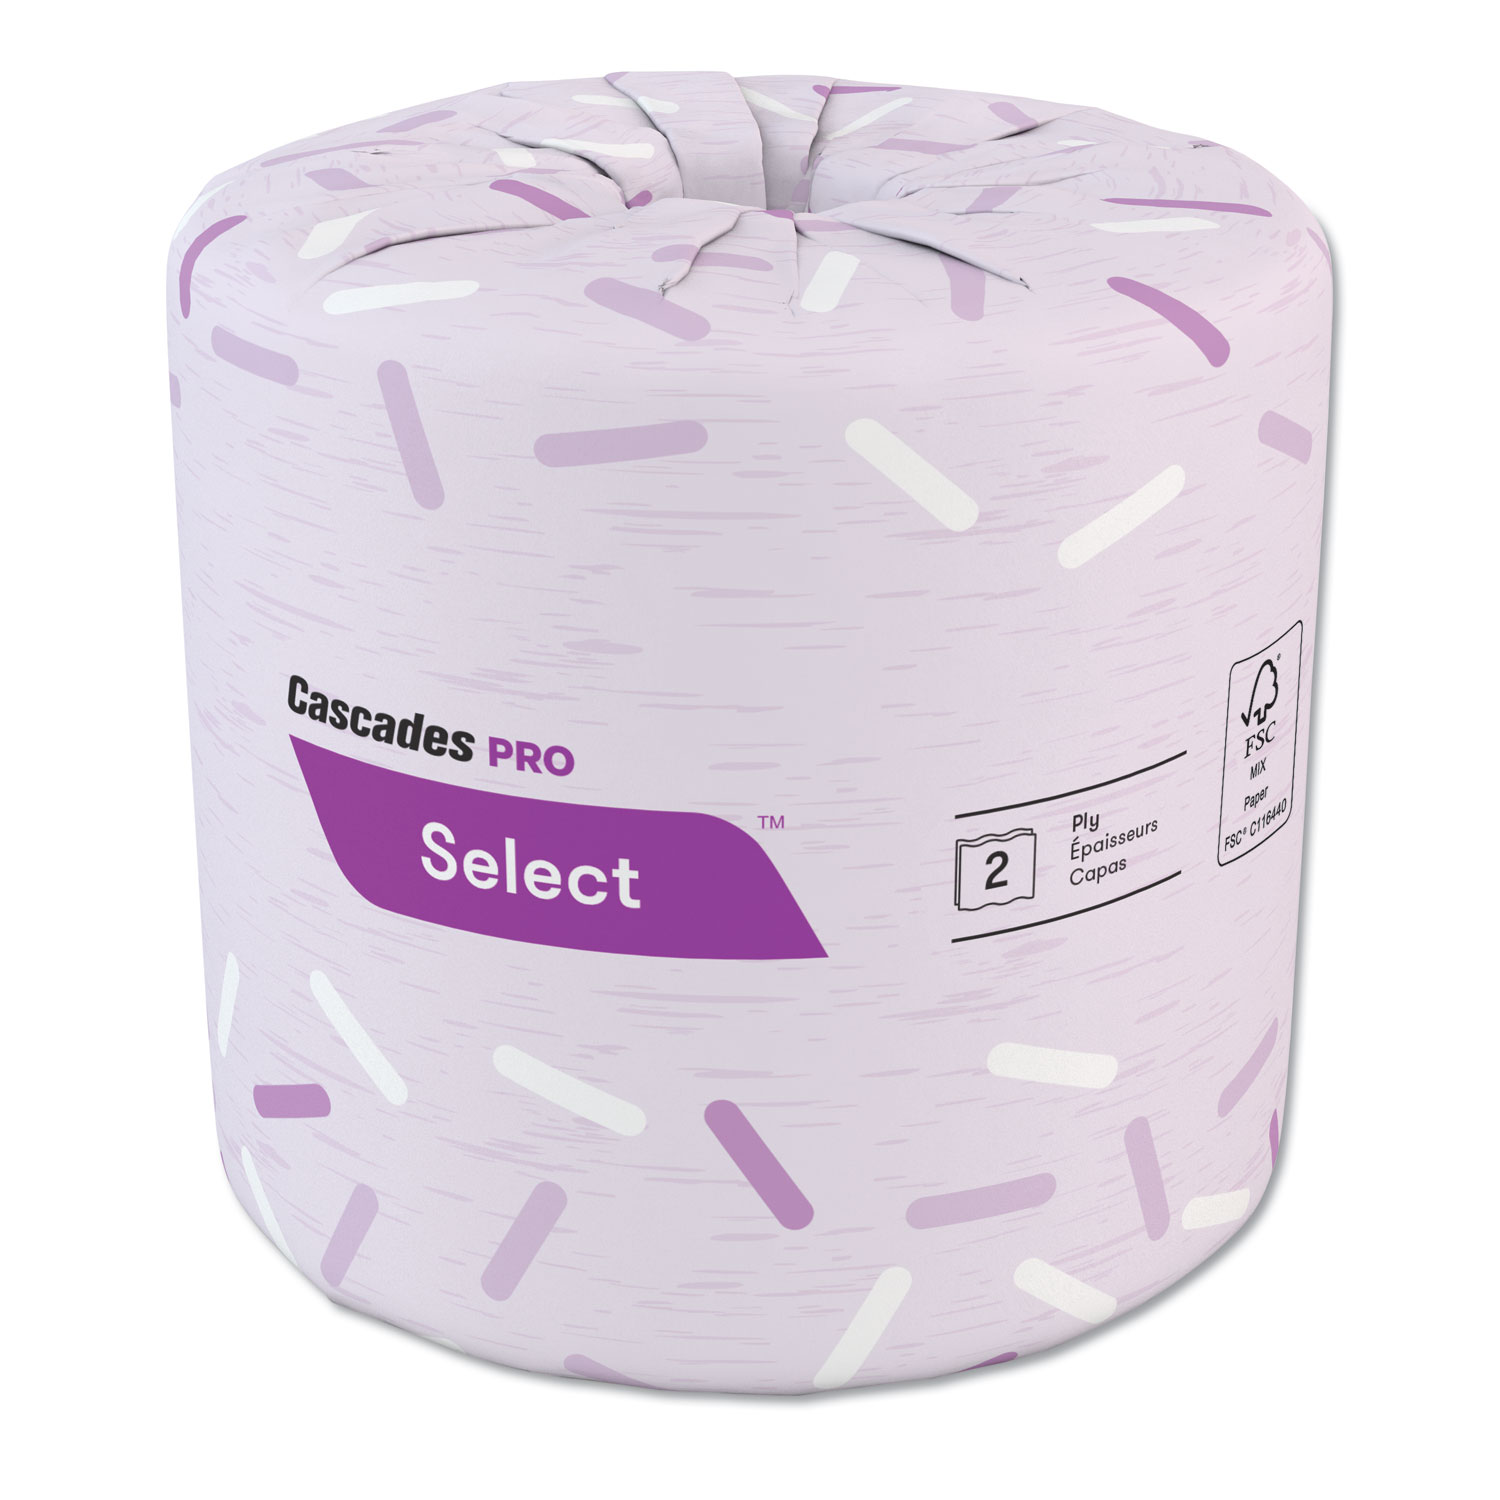  Cascades PRO B166 Select Standard Bath Tissue, 2-Ply, White, 4 x 3, 500 Sheets/Roll, 96 Rolls/Carton (CSDB166) 